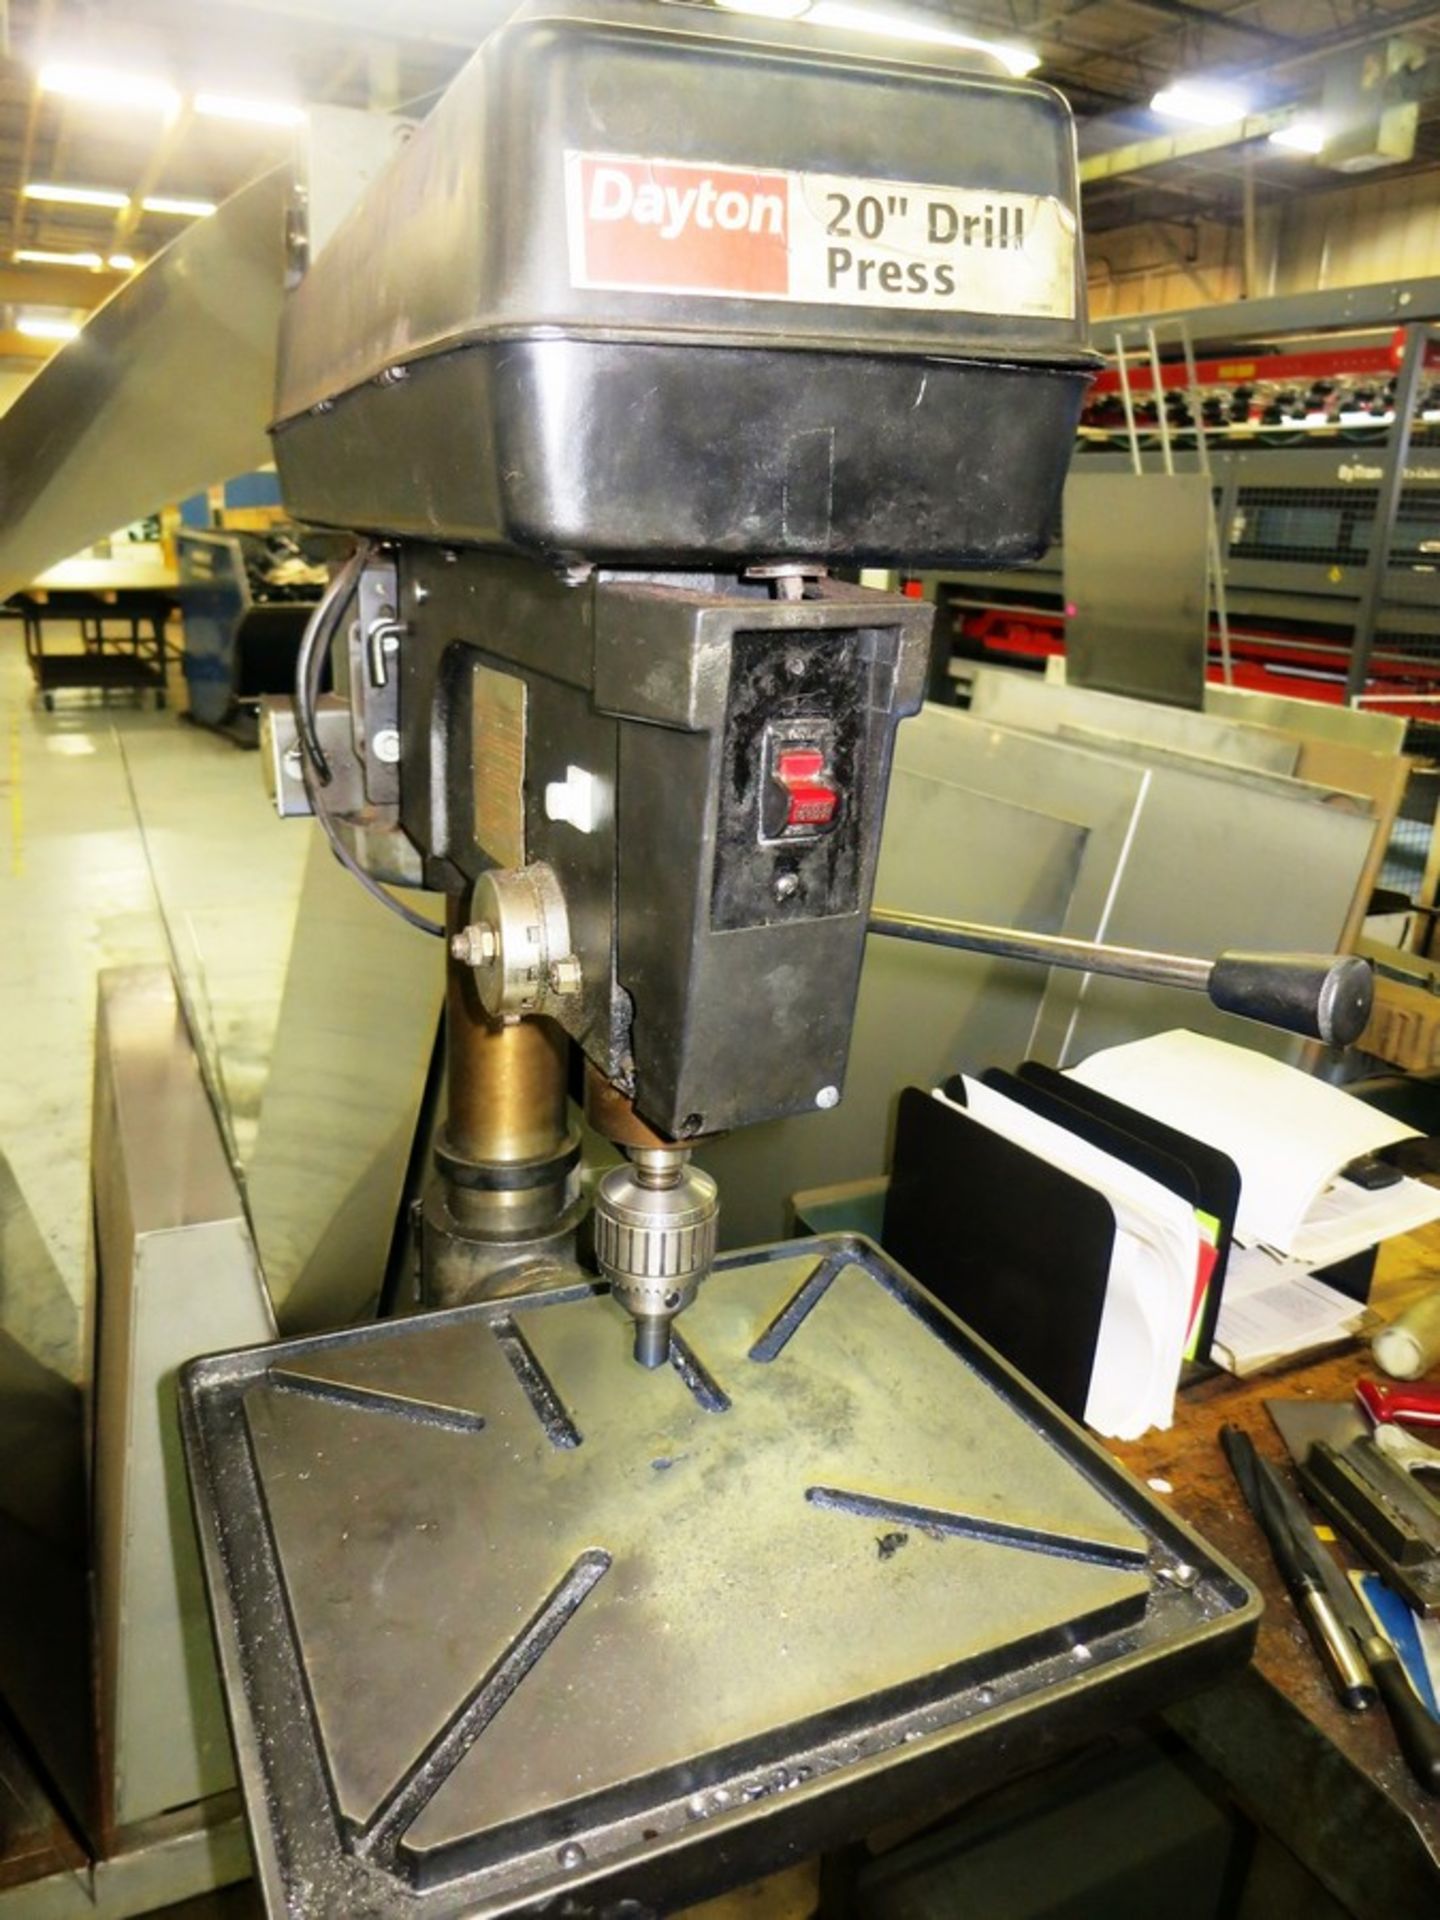 Dayton 20" Drill Press Model 3Z919C, S/N 11316036 - Image 2 of 2